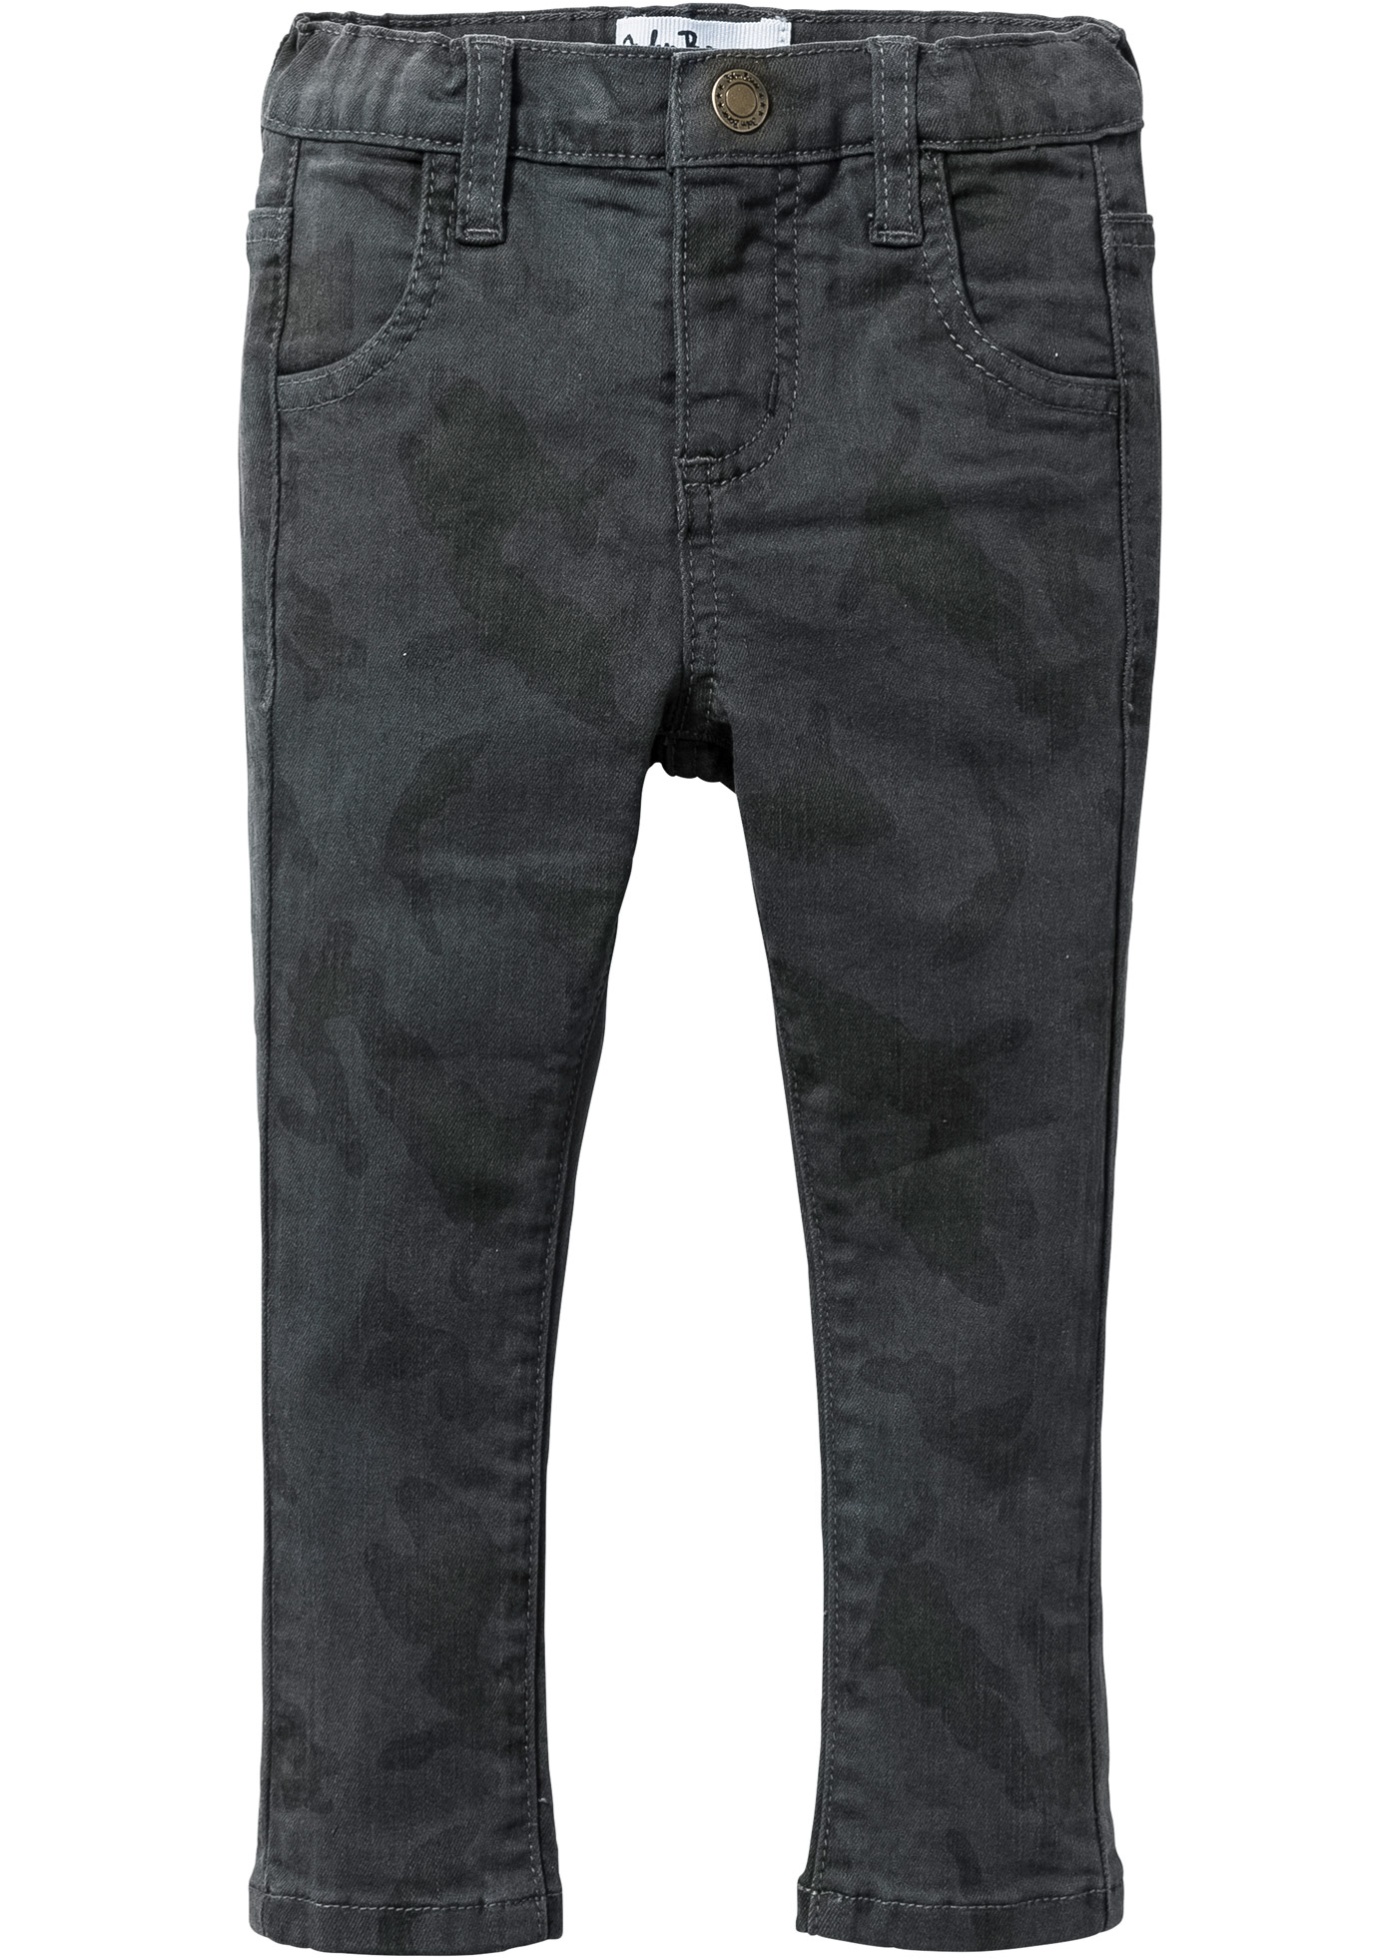 Mönstrade jeans, strl. 80-134